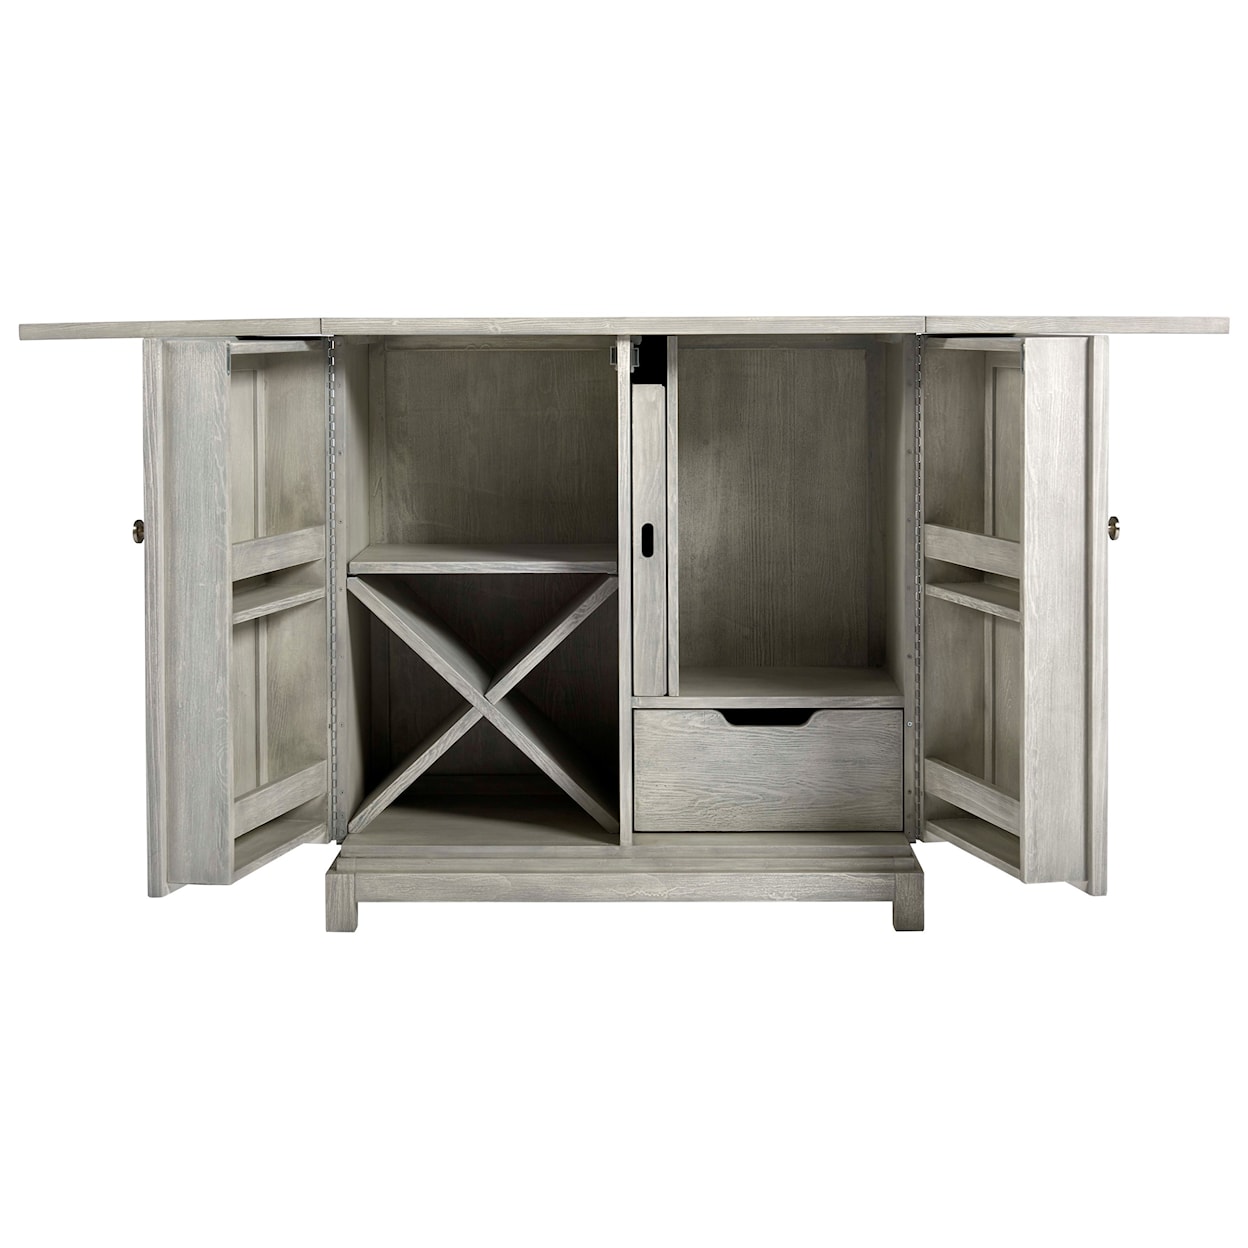 Universal Getaway Coastal Living Home 311563109 Coastal Utility Cabinet  with Adjustable Shelves, Baer's Furniture